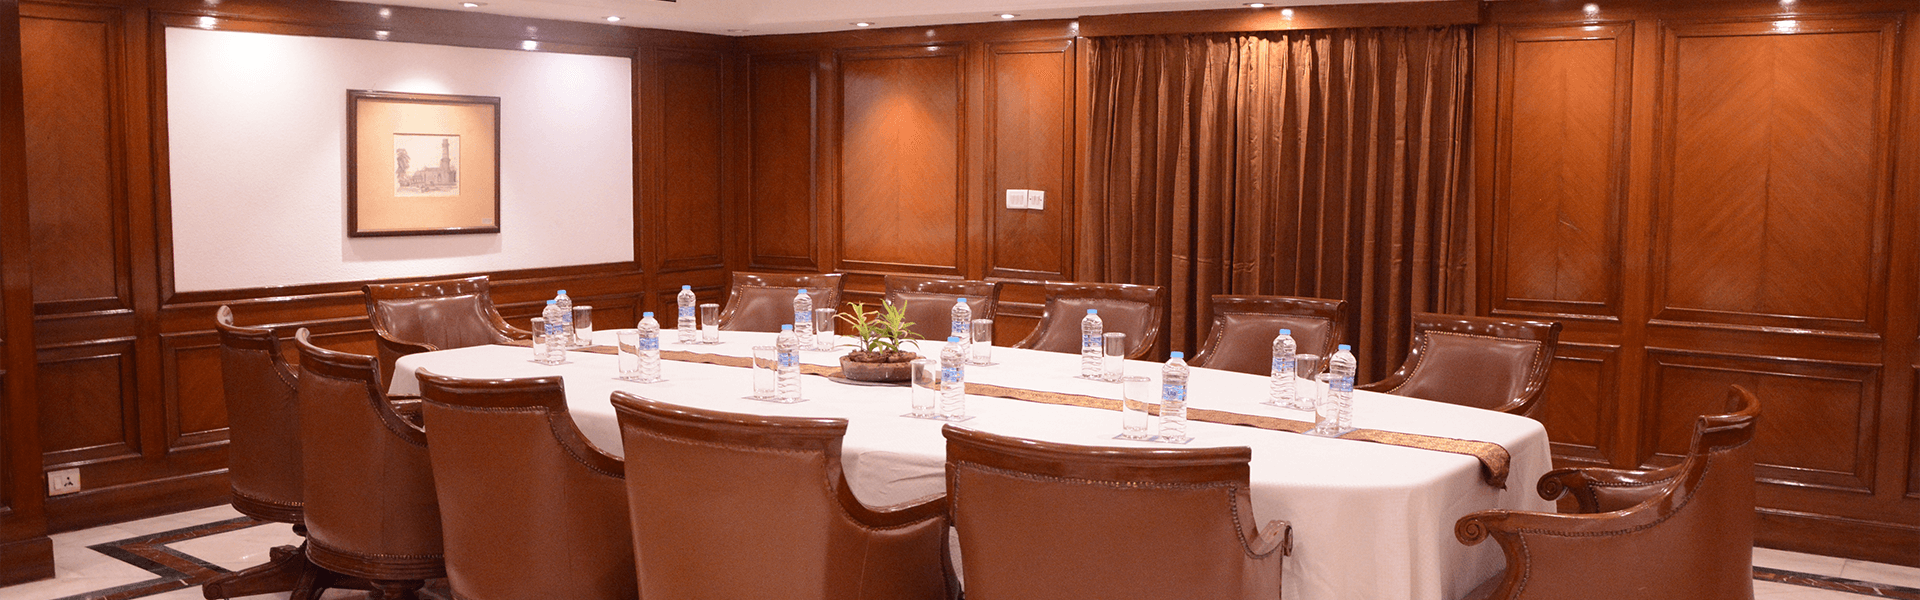 Executive Lounge India Tourism Development Corporation The Ashok